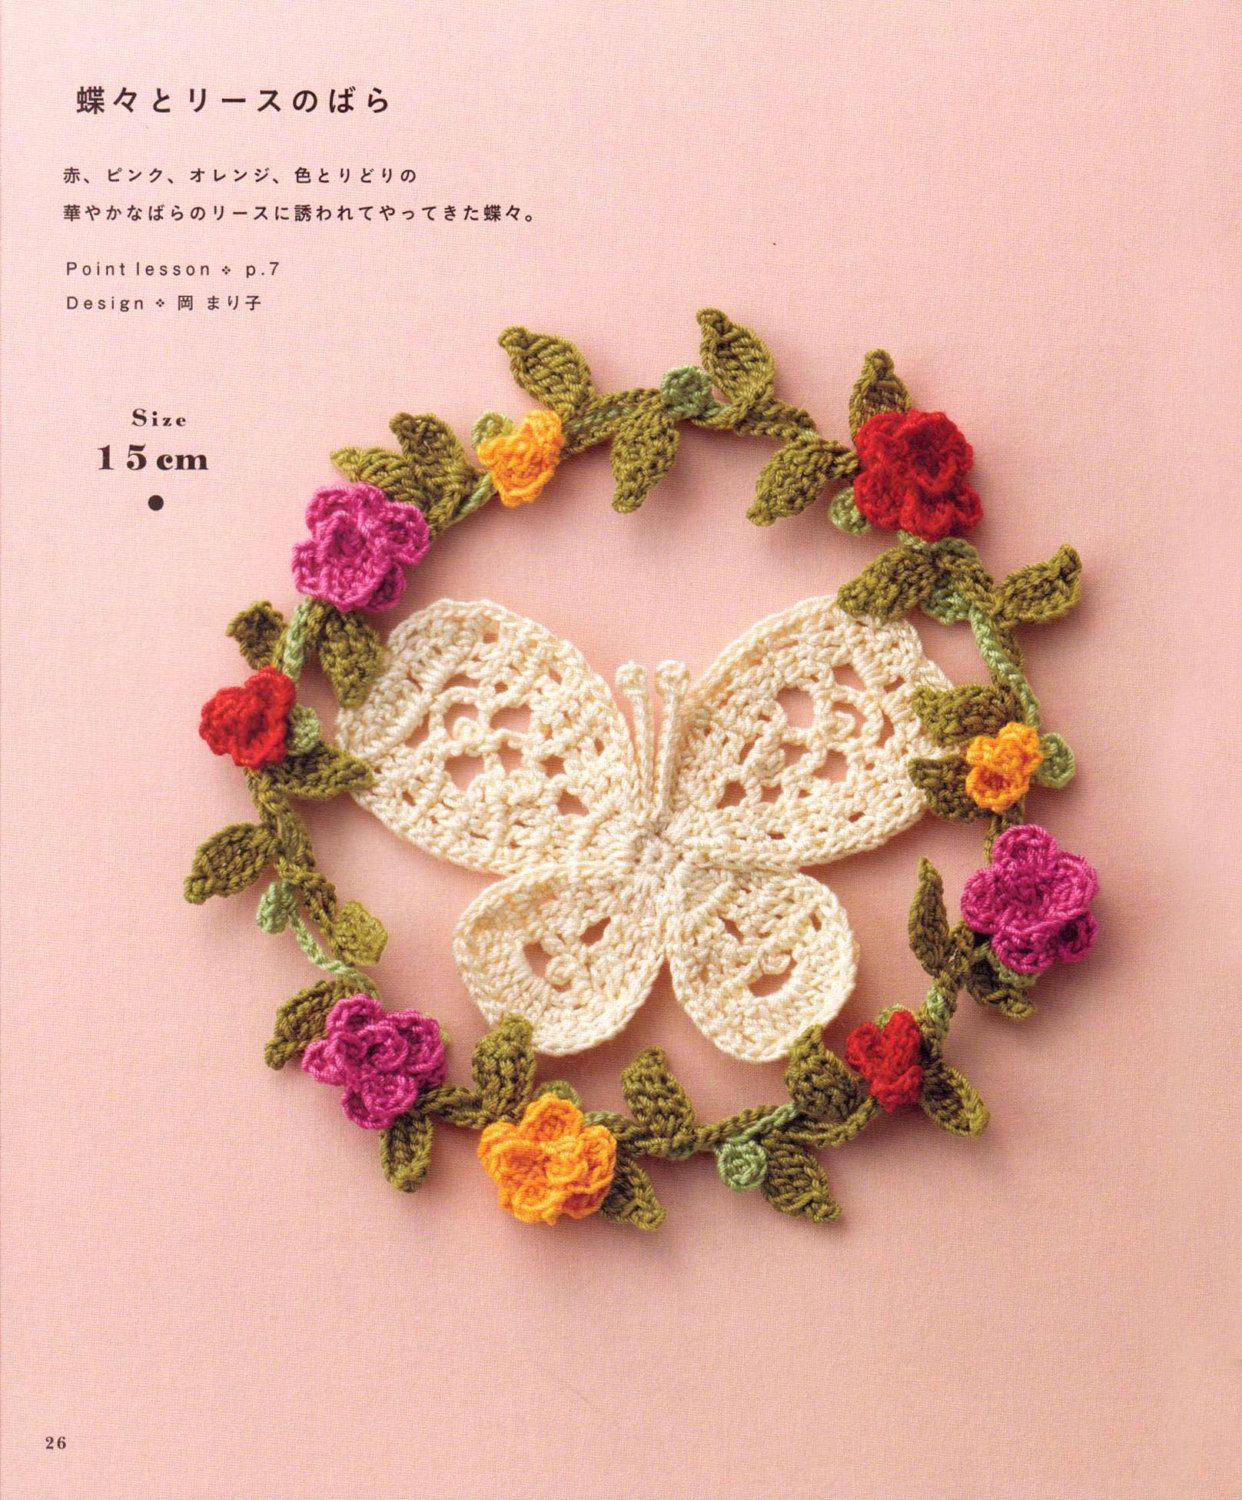 Japanese Crochet Patterns Japanese Crochet Pattern Ebook 361 Flower Bloom Picochrocknitto